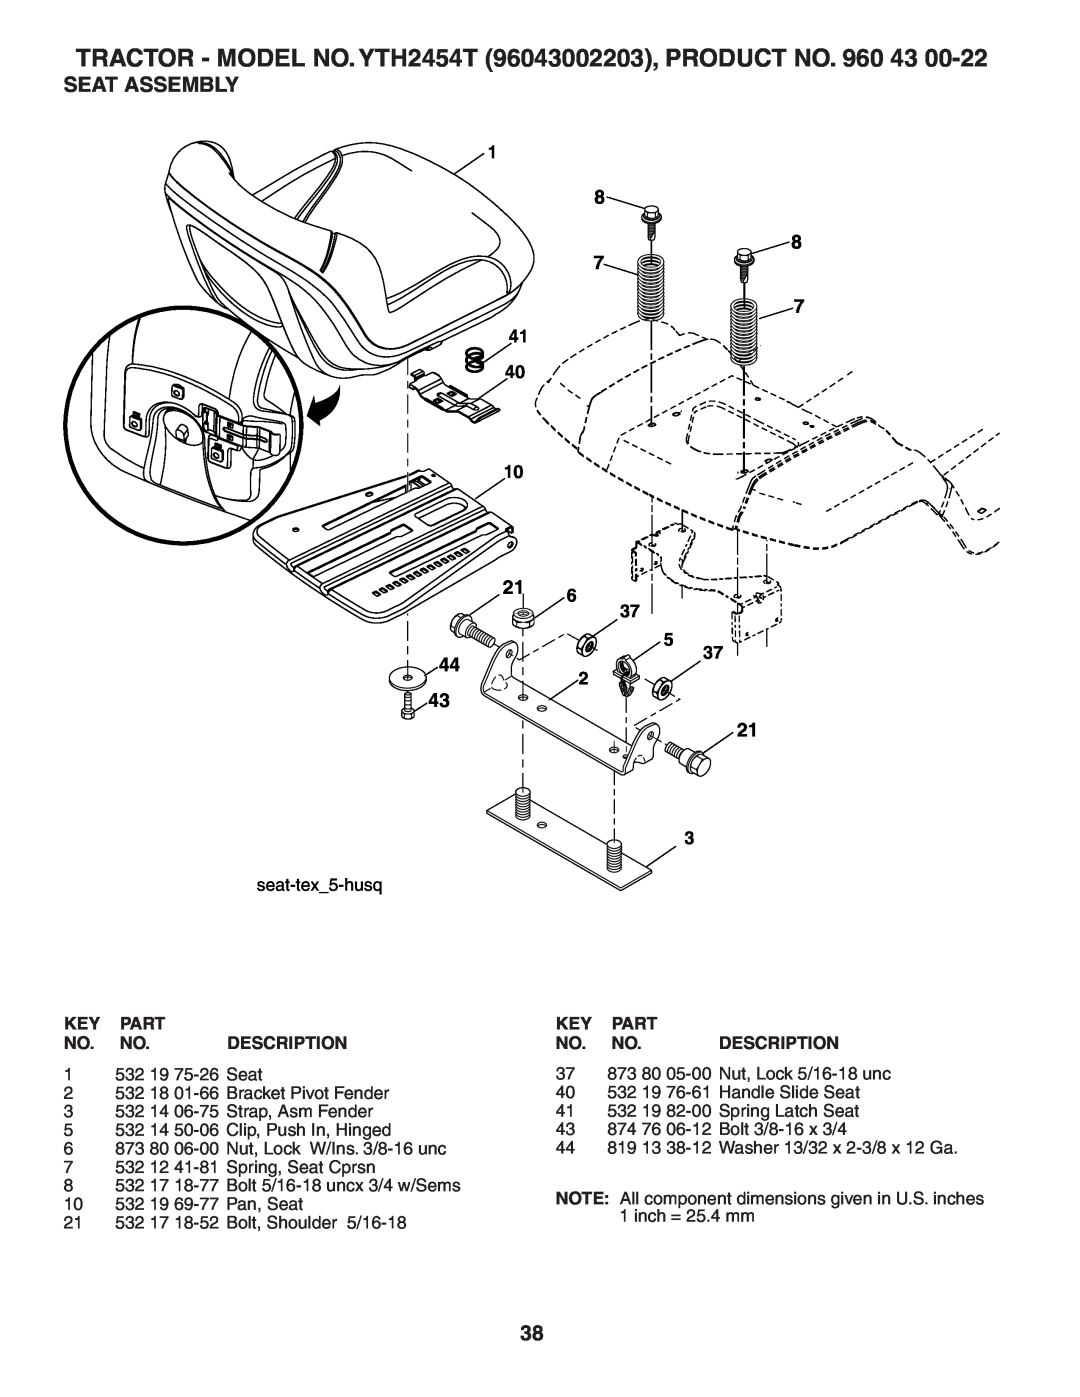 Husqvarna YTH2454T owner manual Seat Assembly, Key Part No. No.Description 